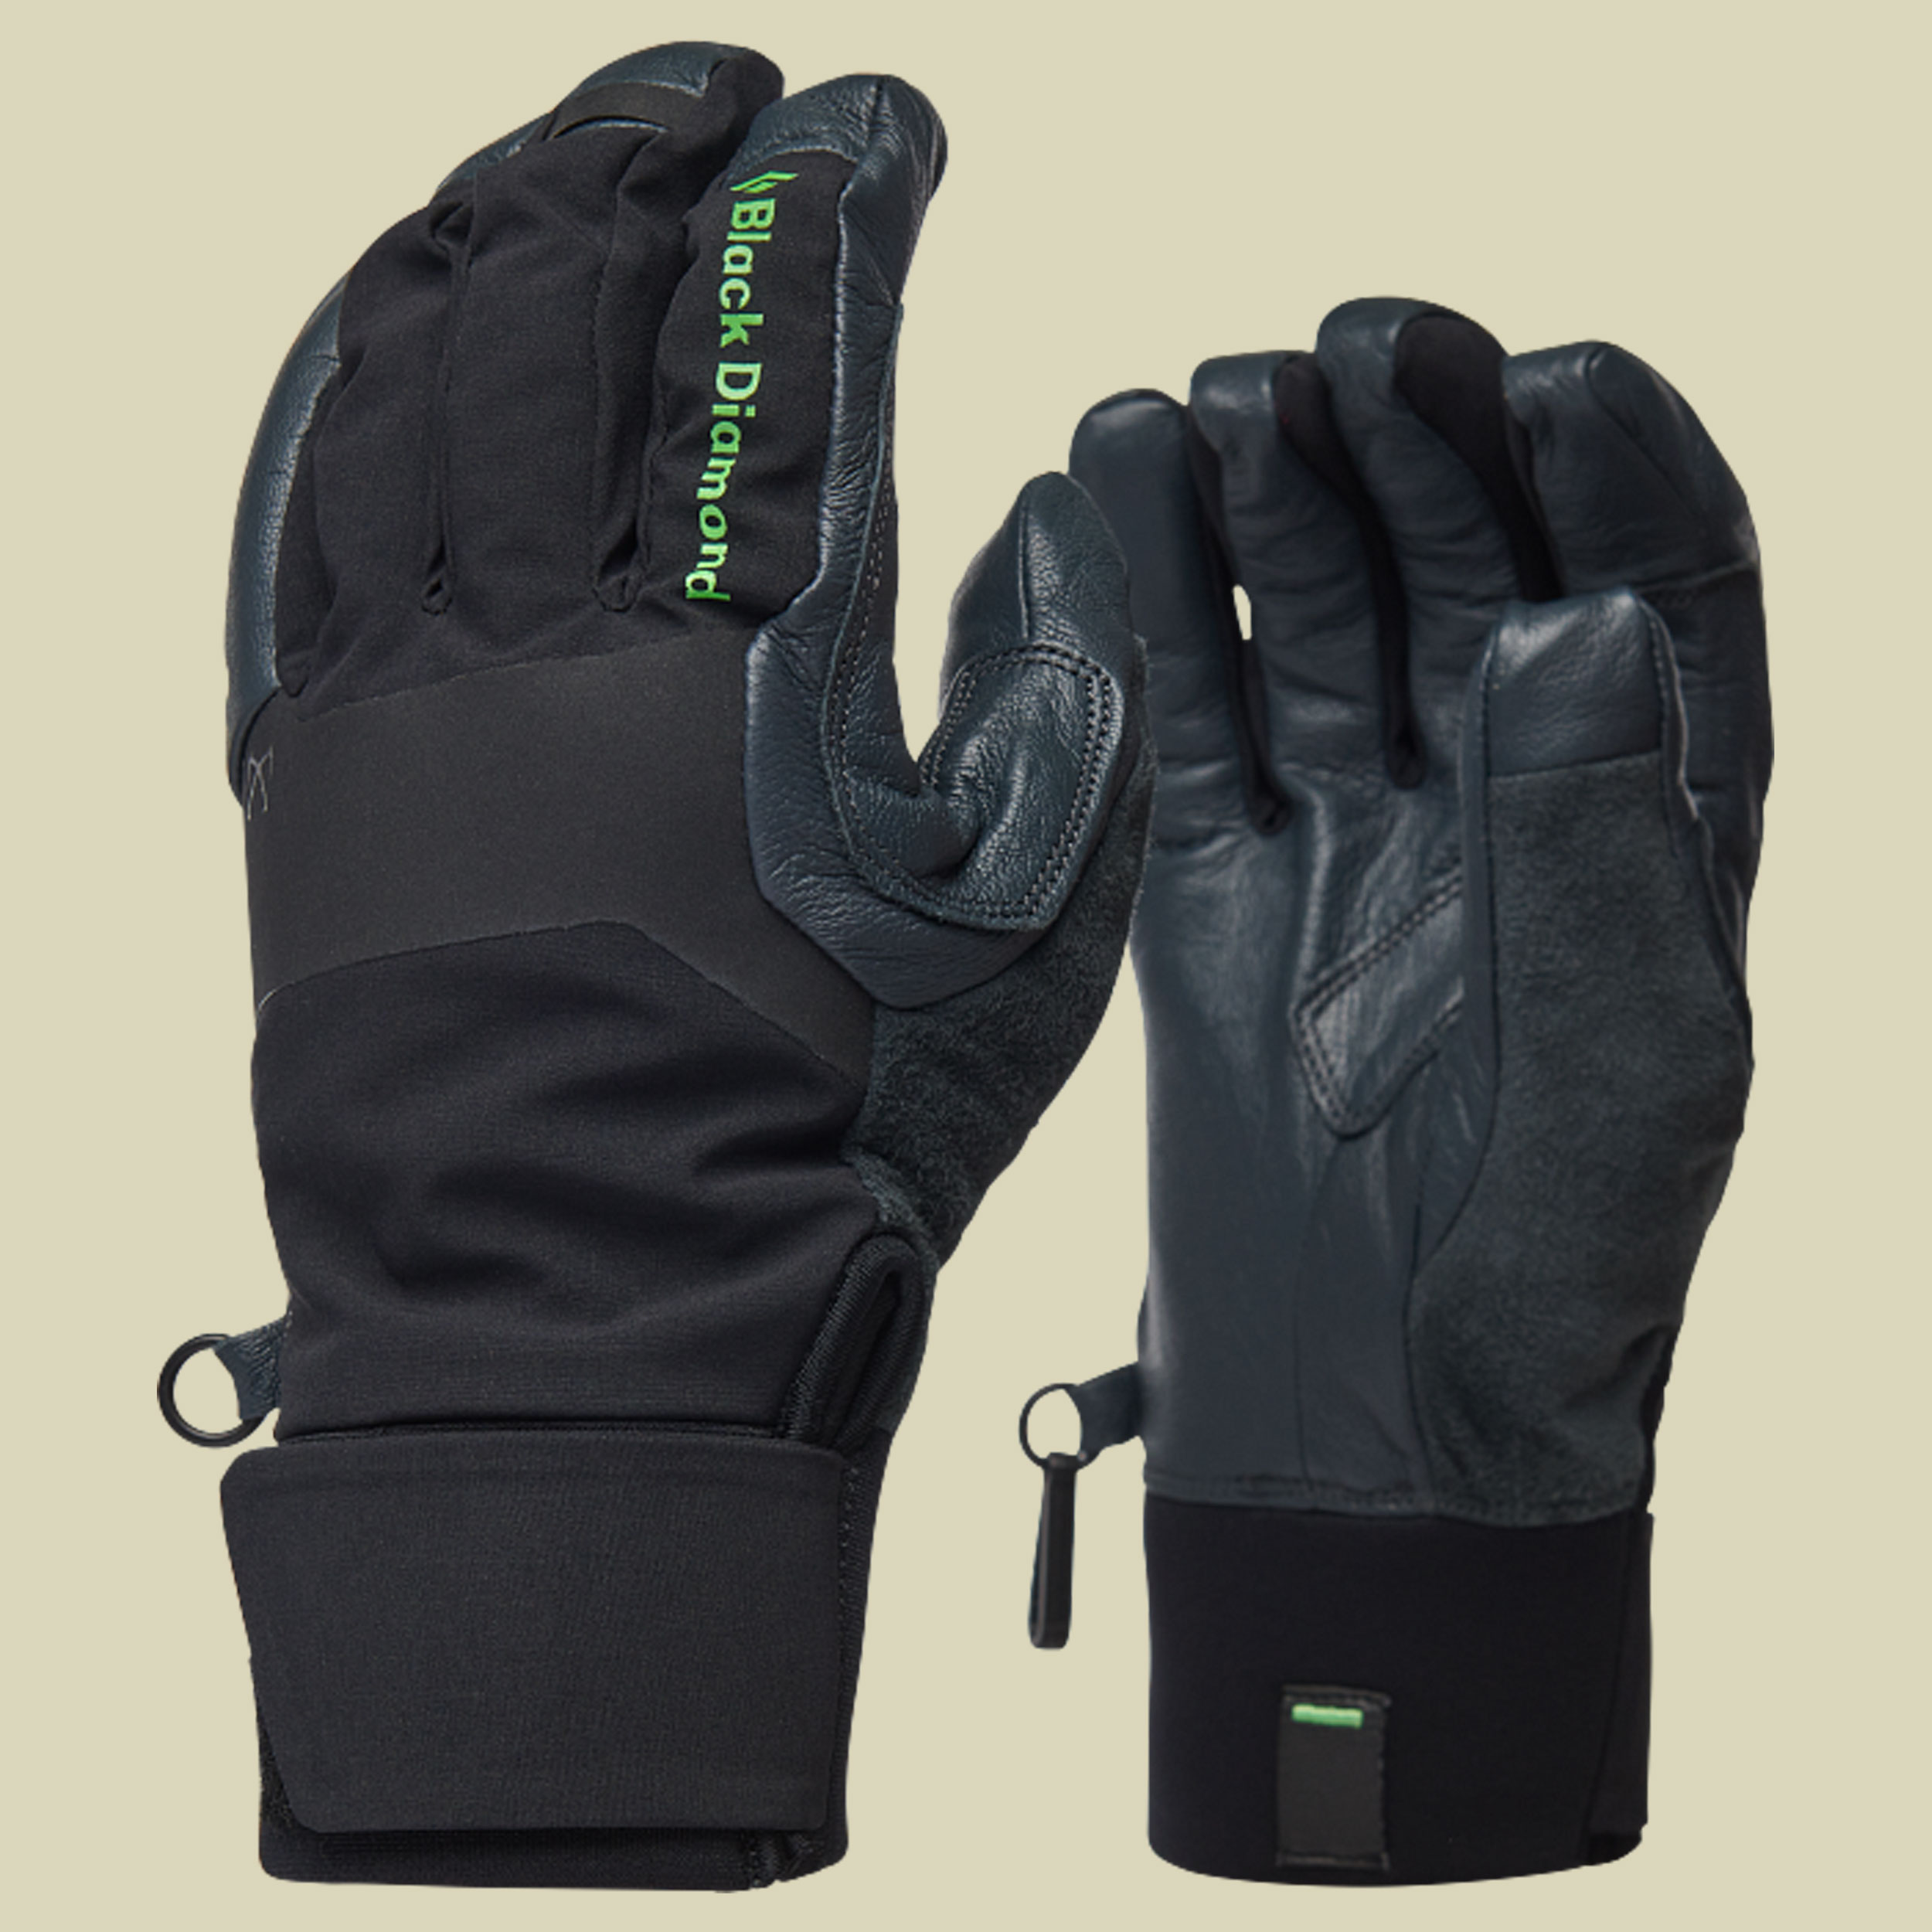 Terminator Gloves Größe S Farbe black